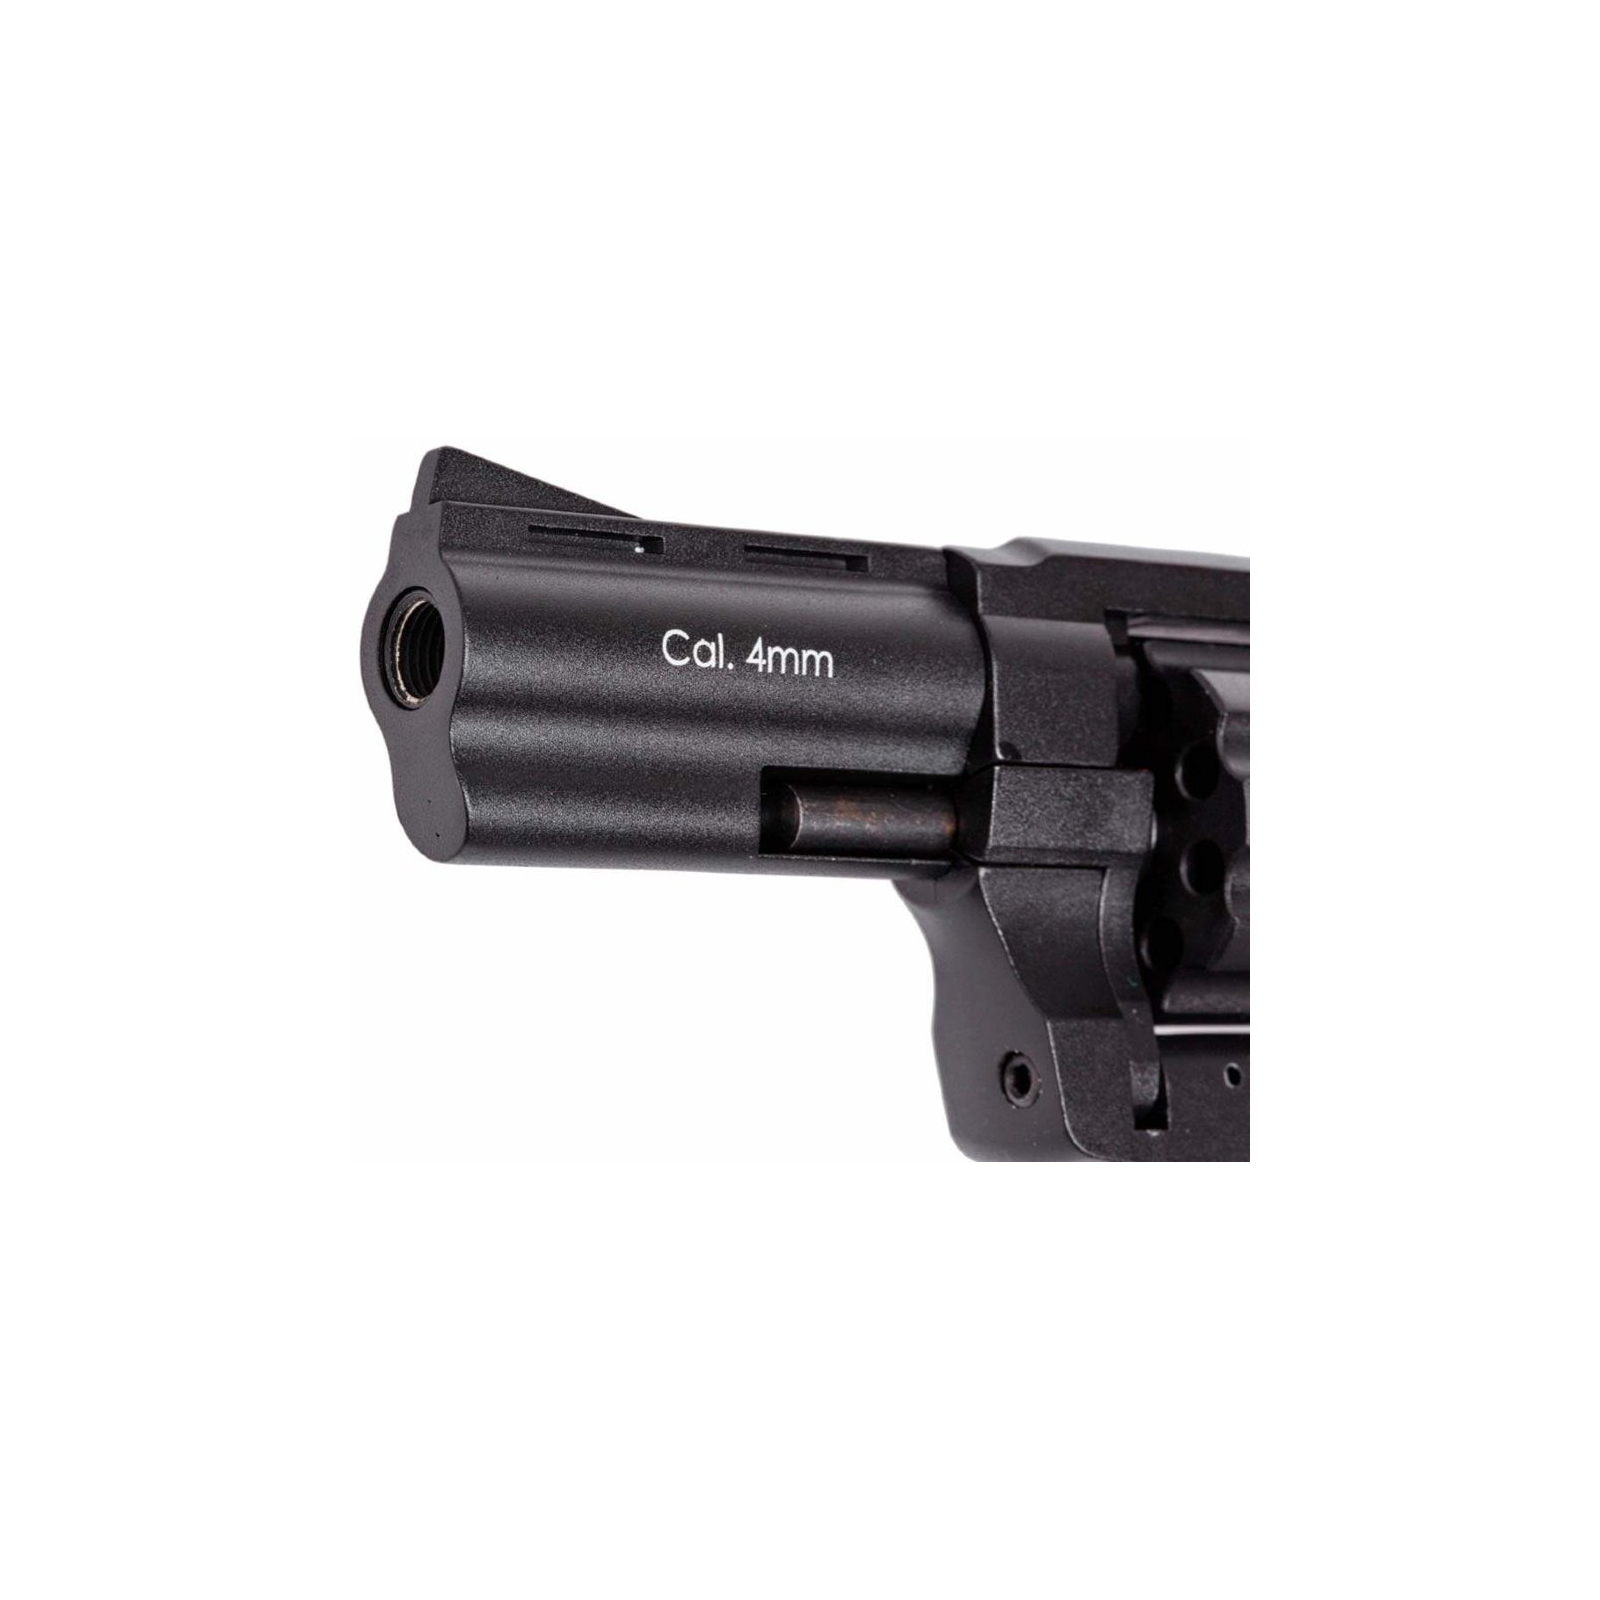 Револьвер под патрон Флобера Stalker S Black 3". Барабан - силумин (ZST3B) изображение 4